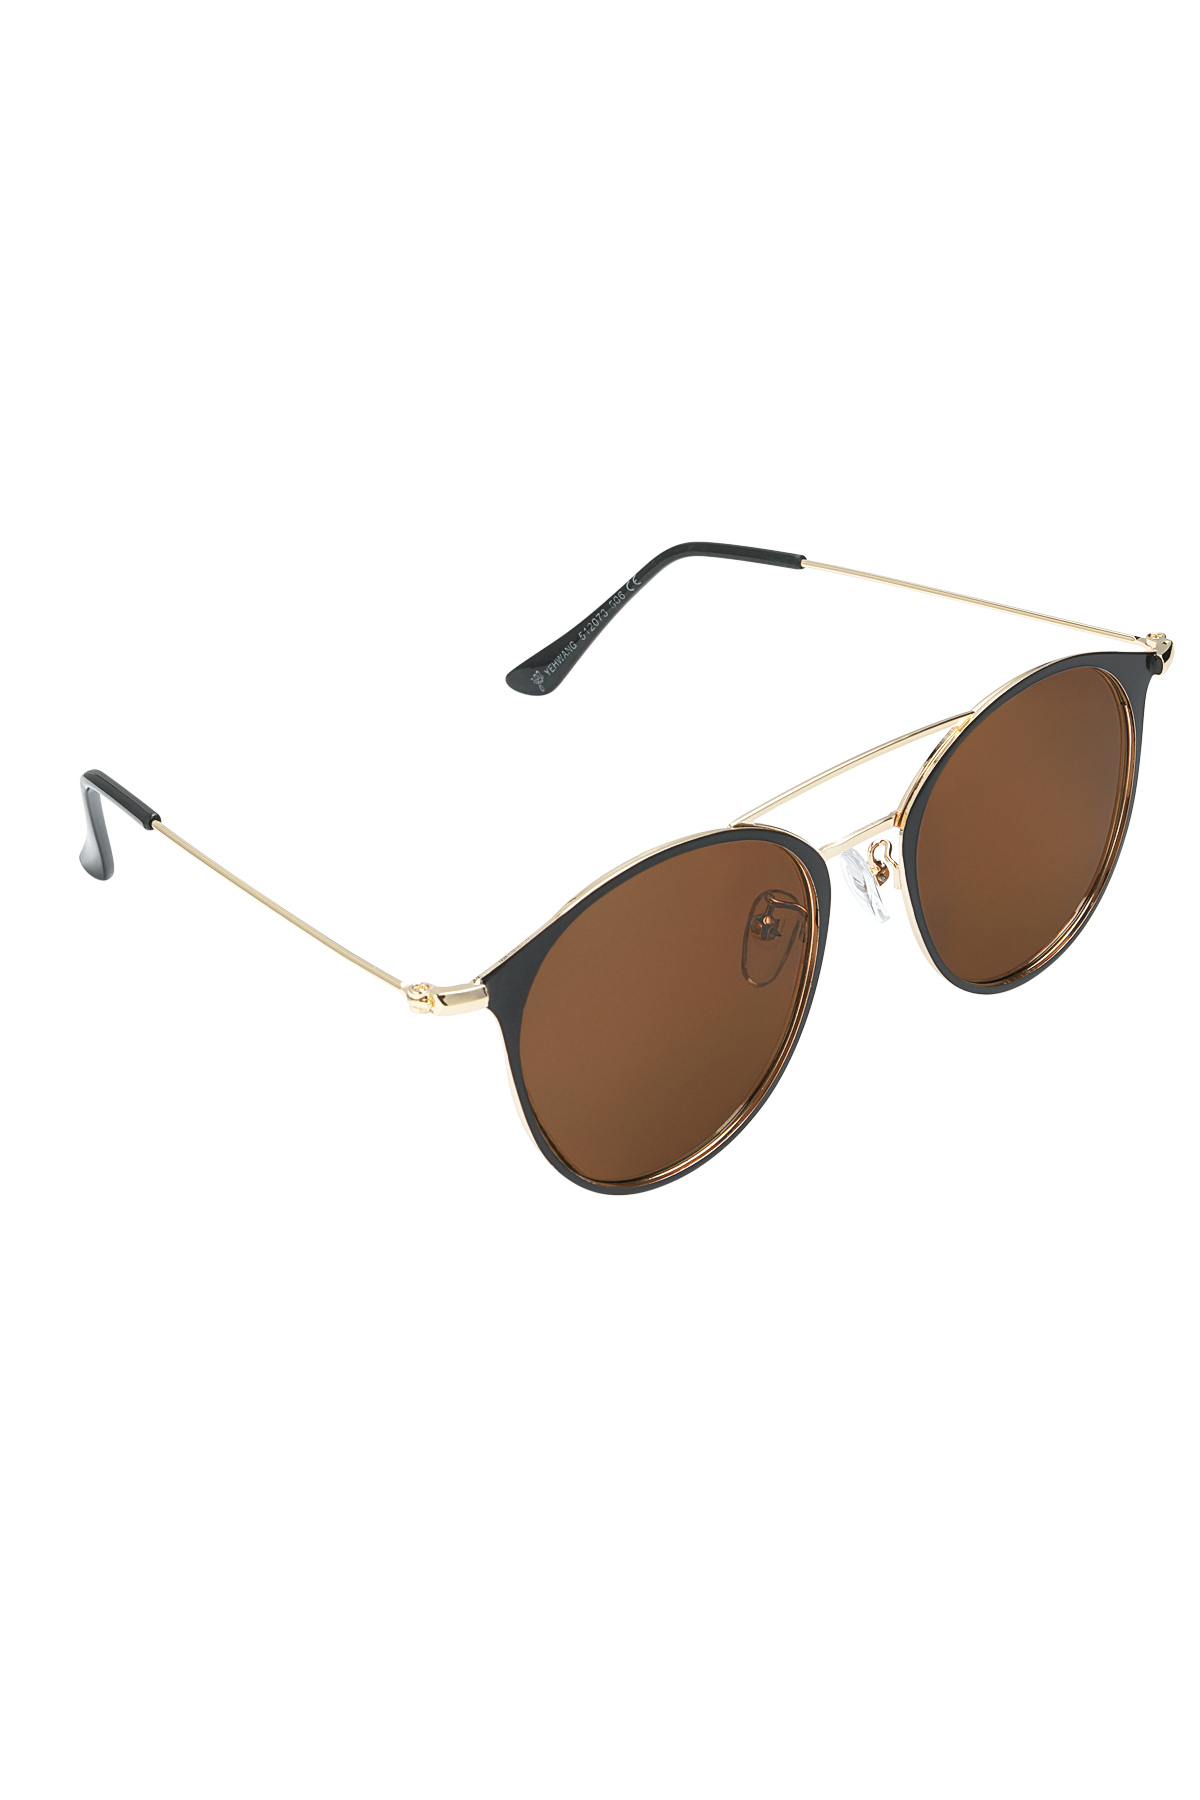 Sunglasses summer vibe - brown/black